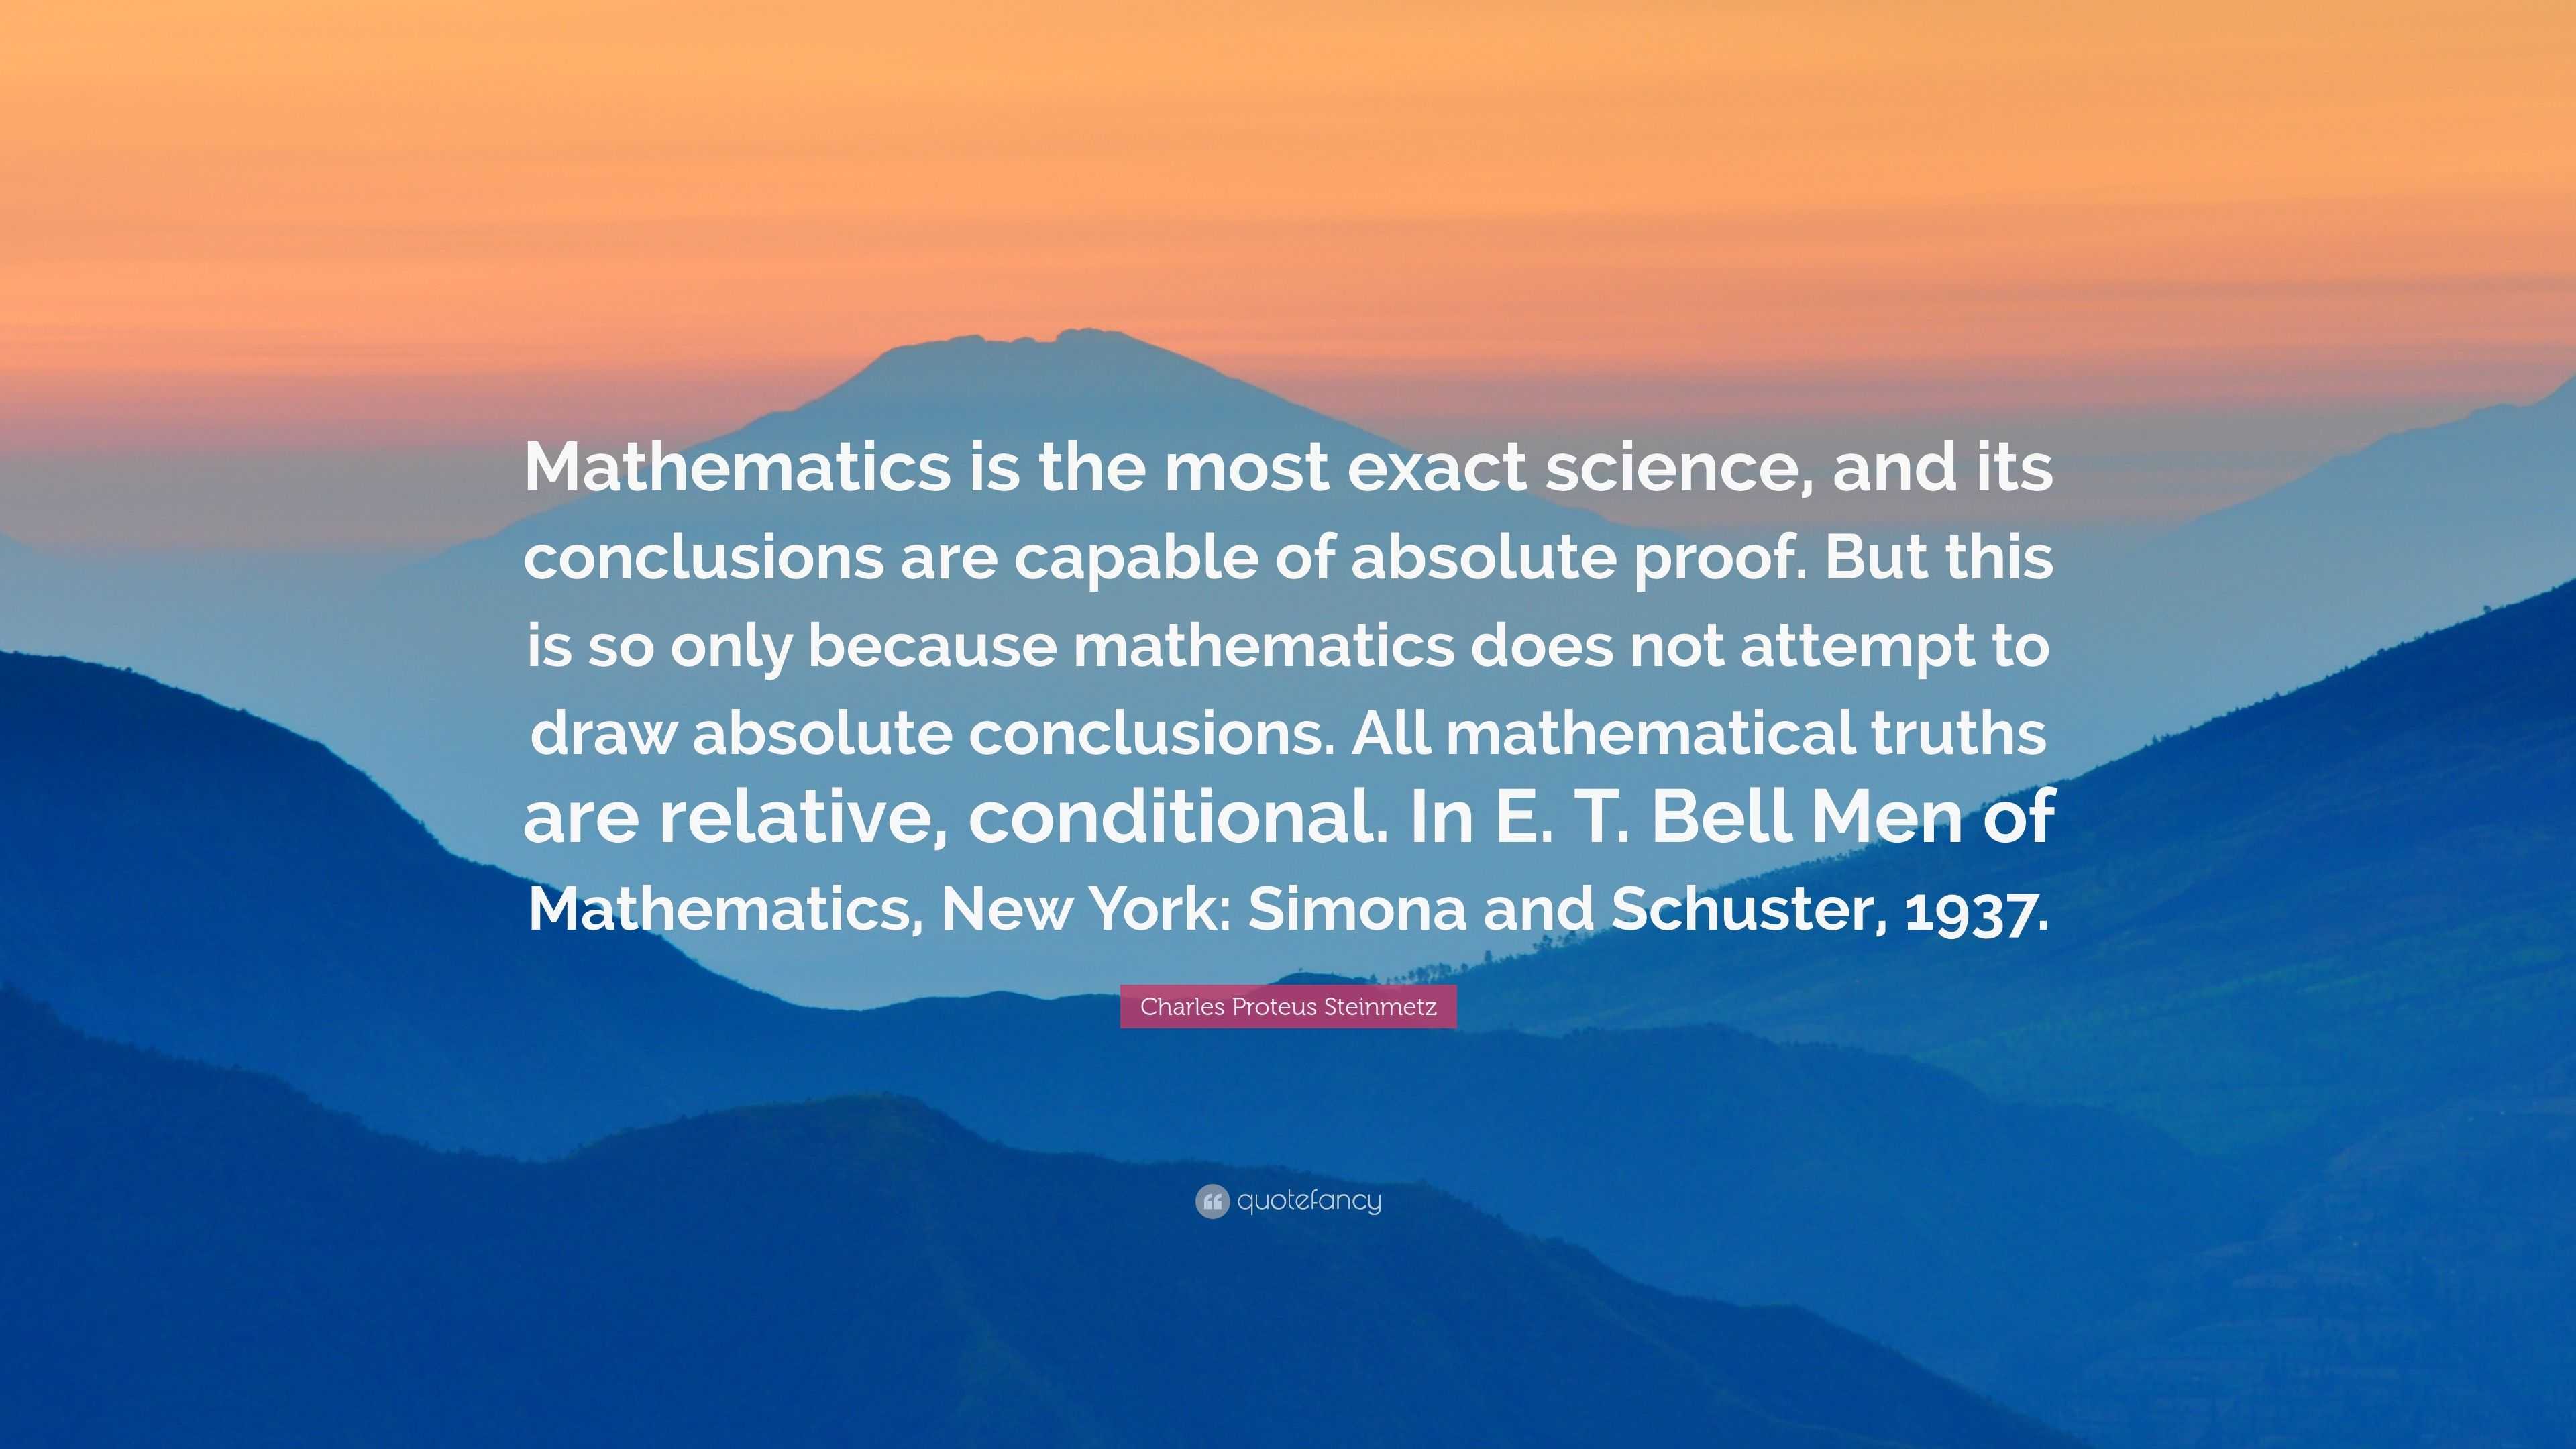 Charles Proteus Steinmetz Quote “Mathematics is the most exact science